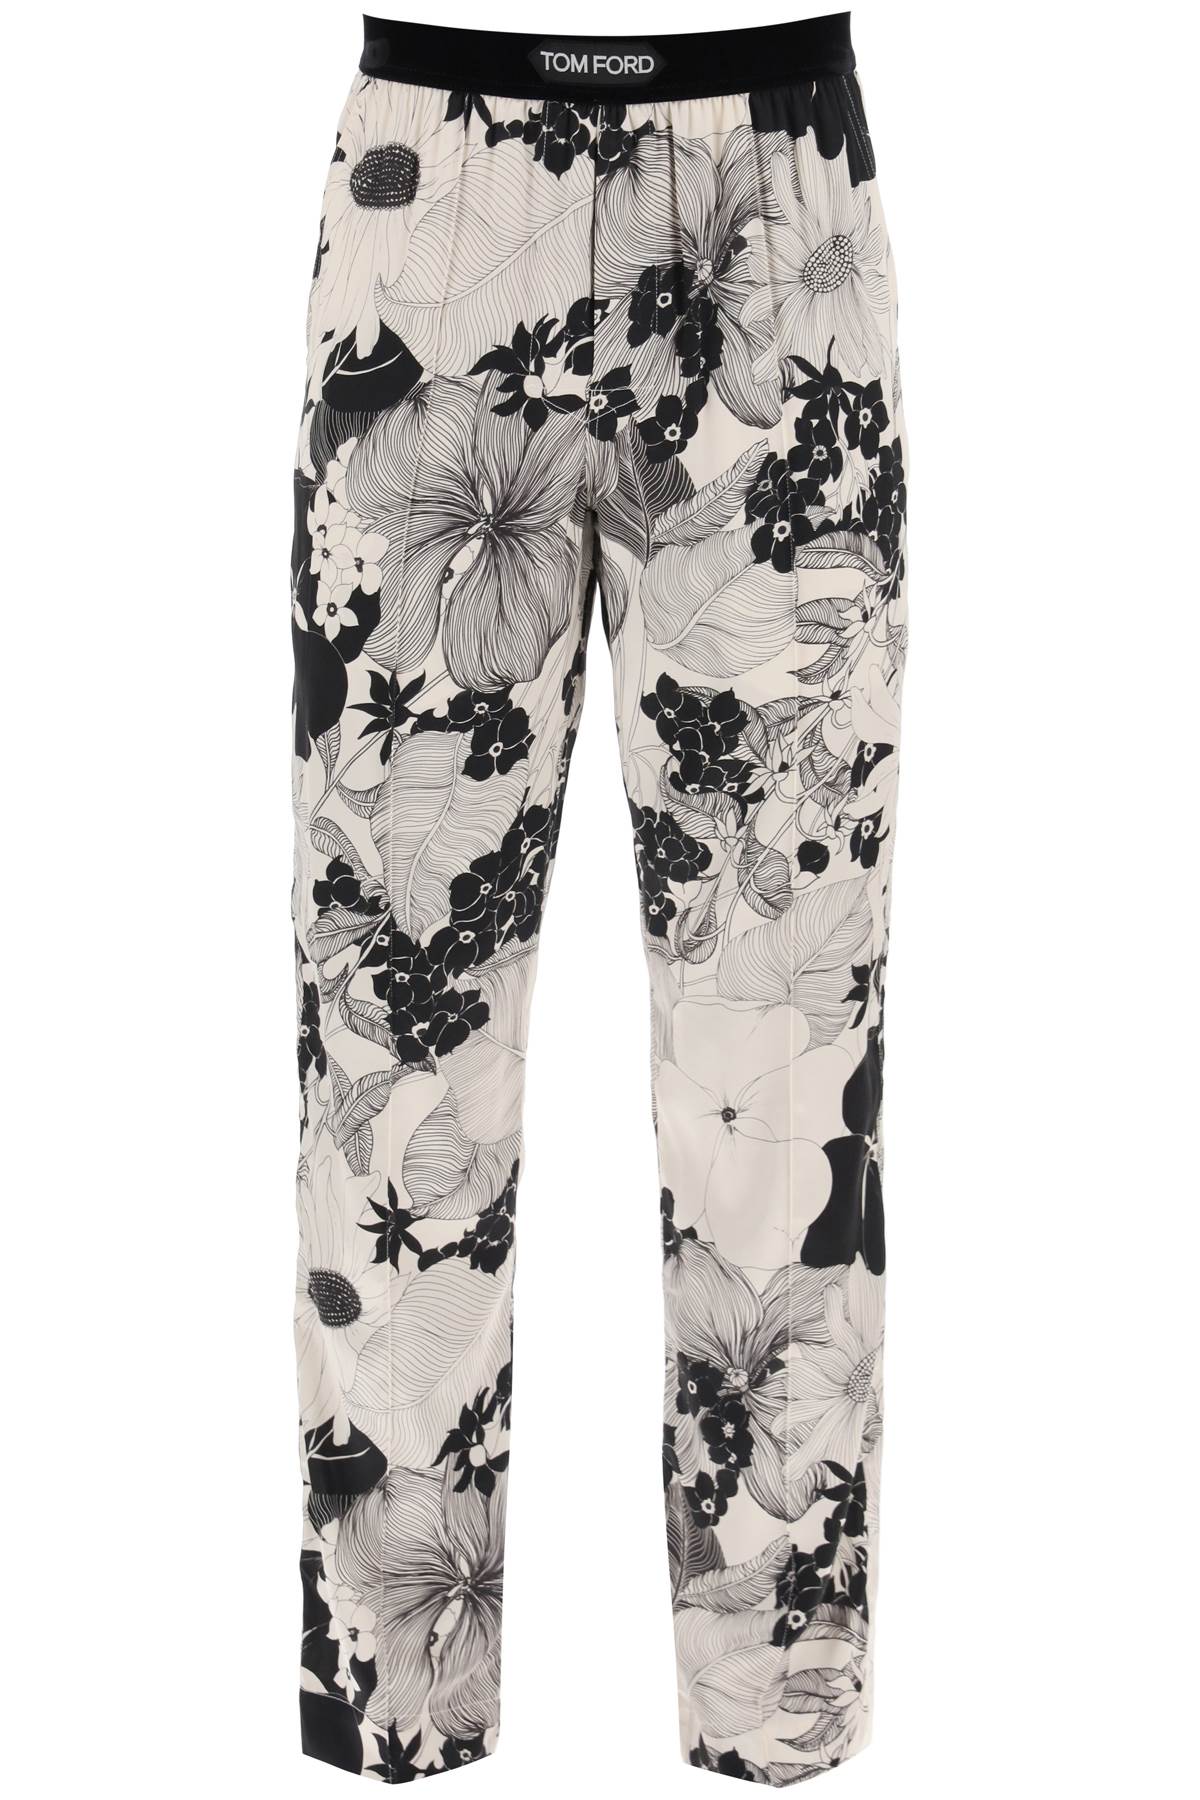 Tom ford pajama pants in floral silk T4H201870 NERO RIGATO